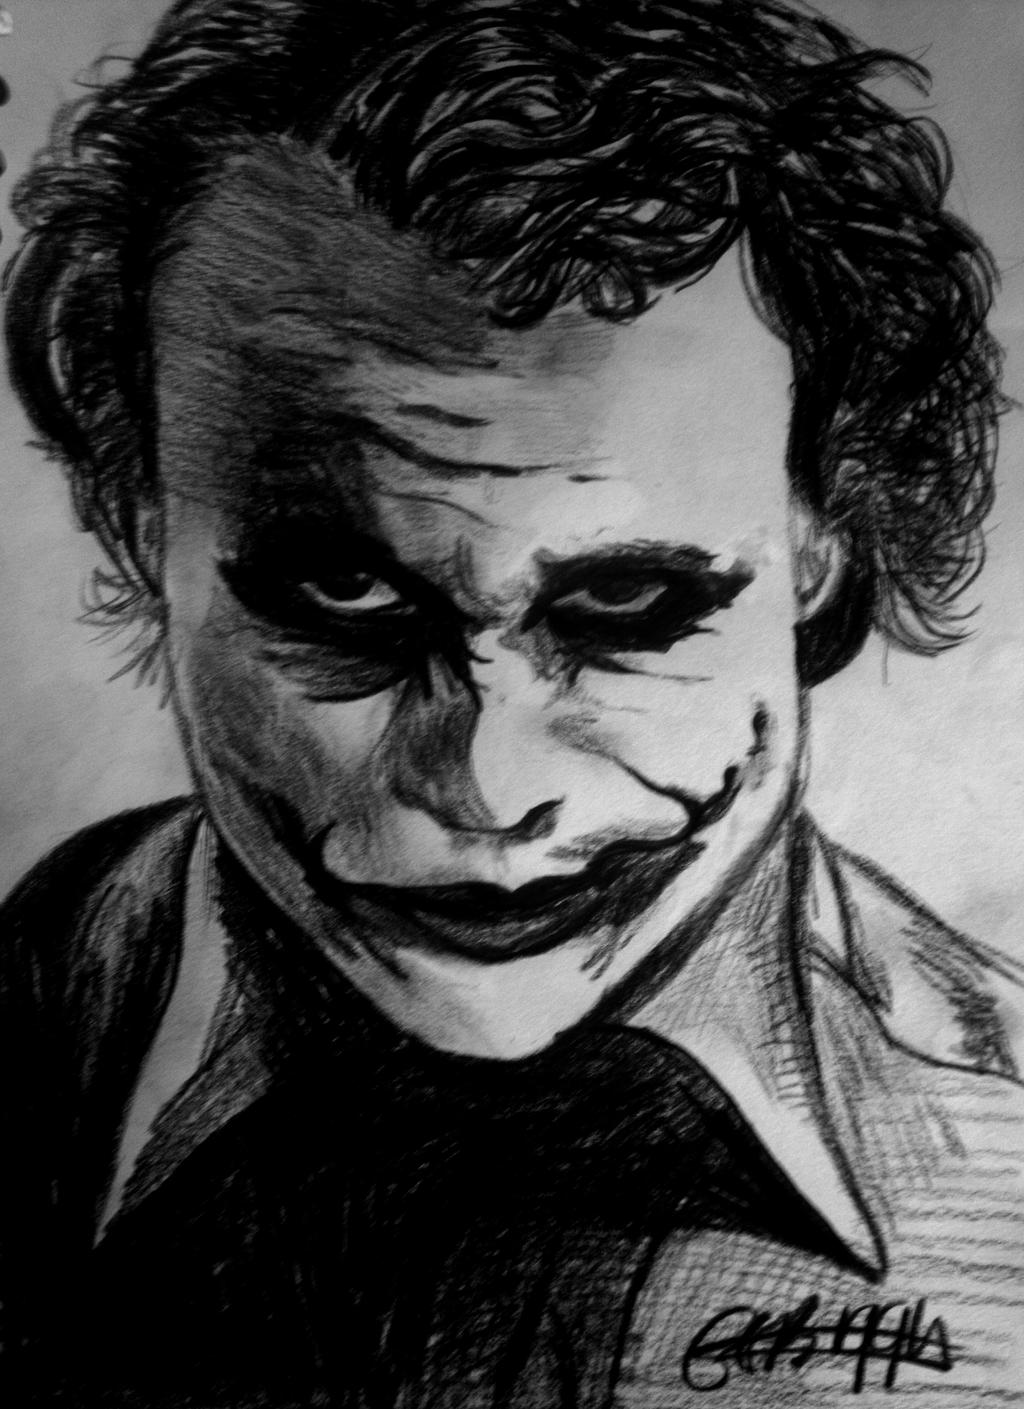 The Joker pencil drawing by EleanorBiggin on DeviantArt